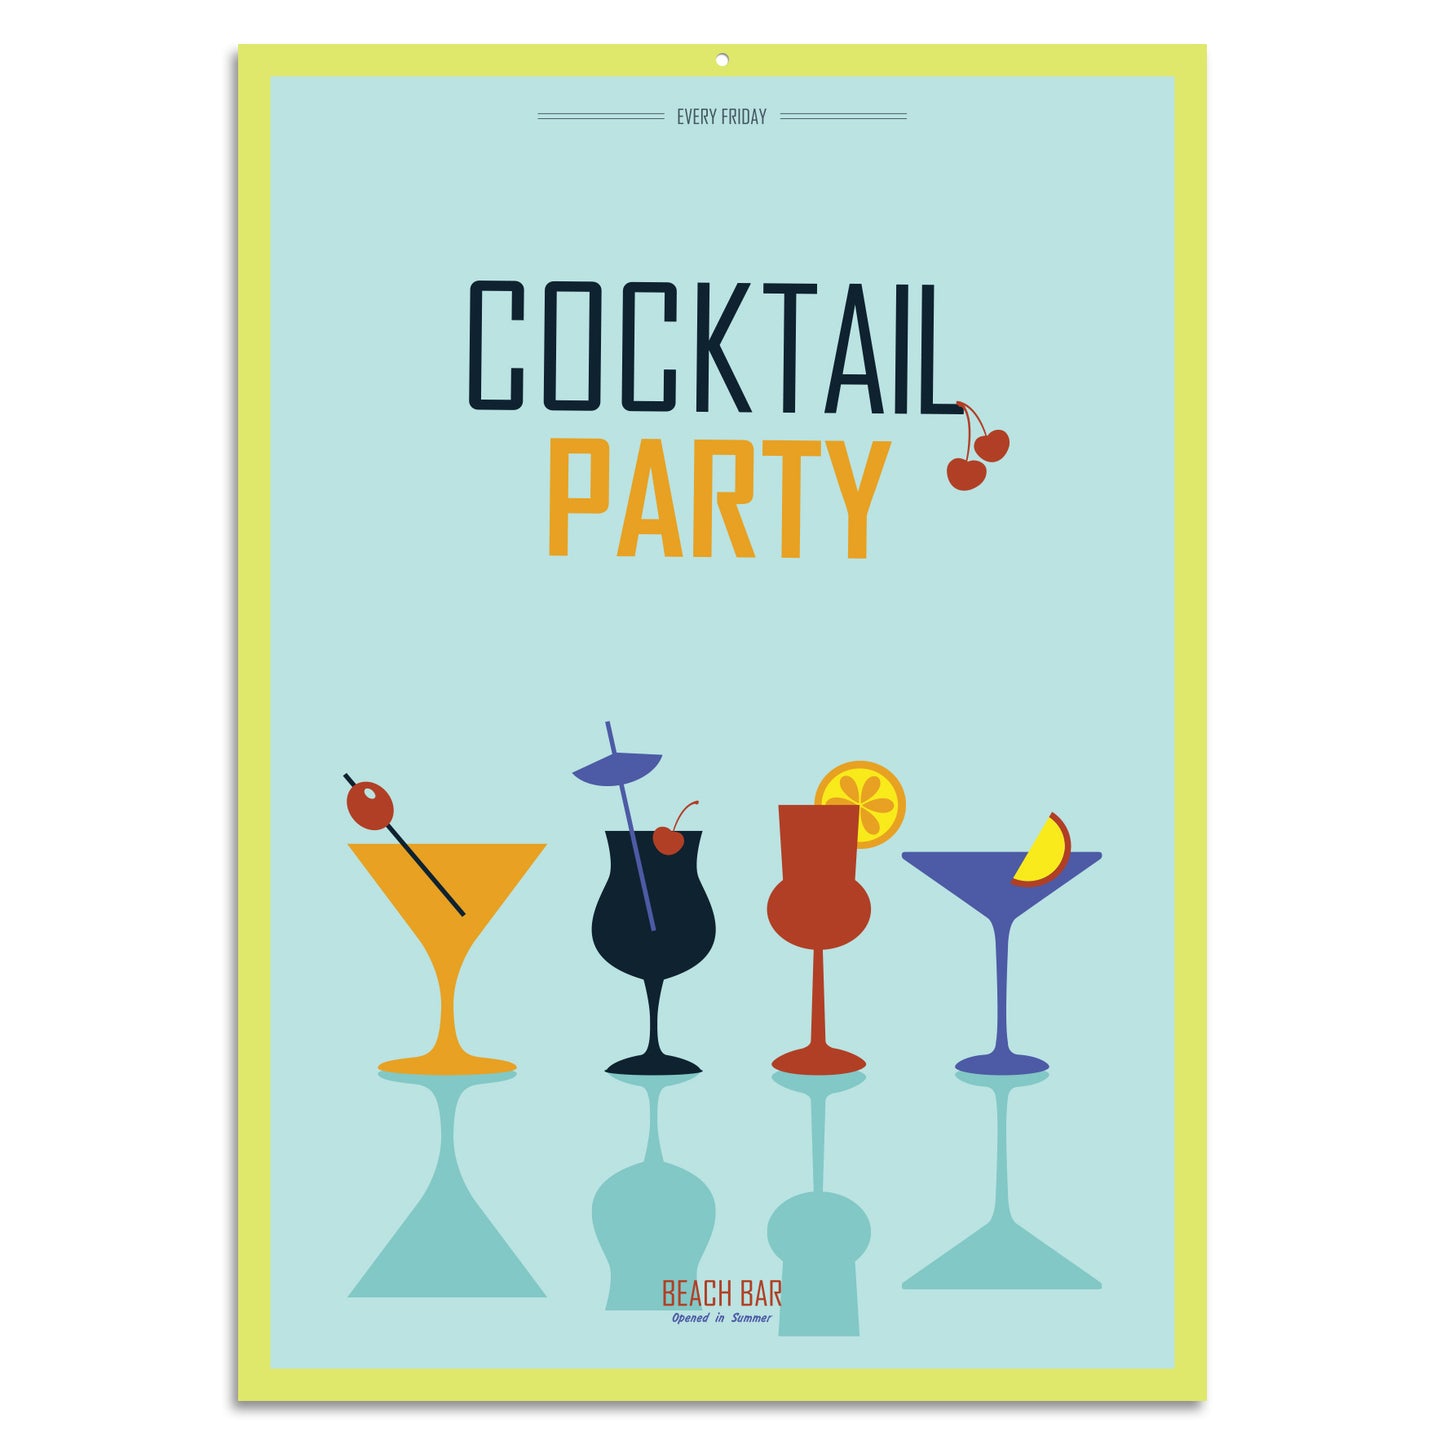 Blechschild - Cocktail Party